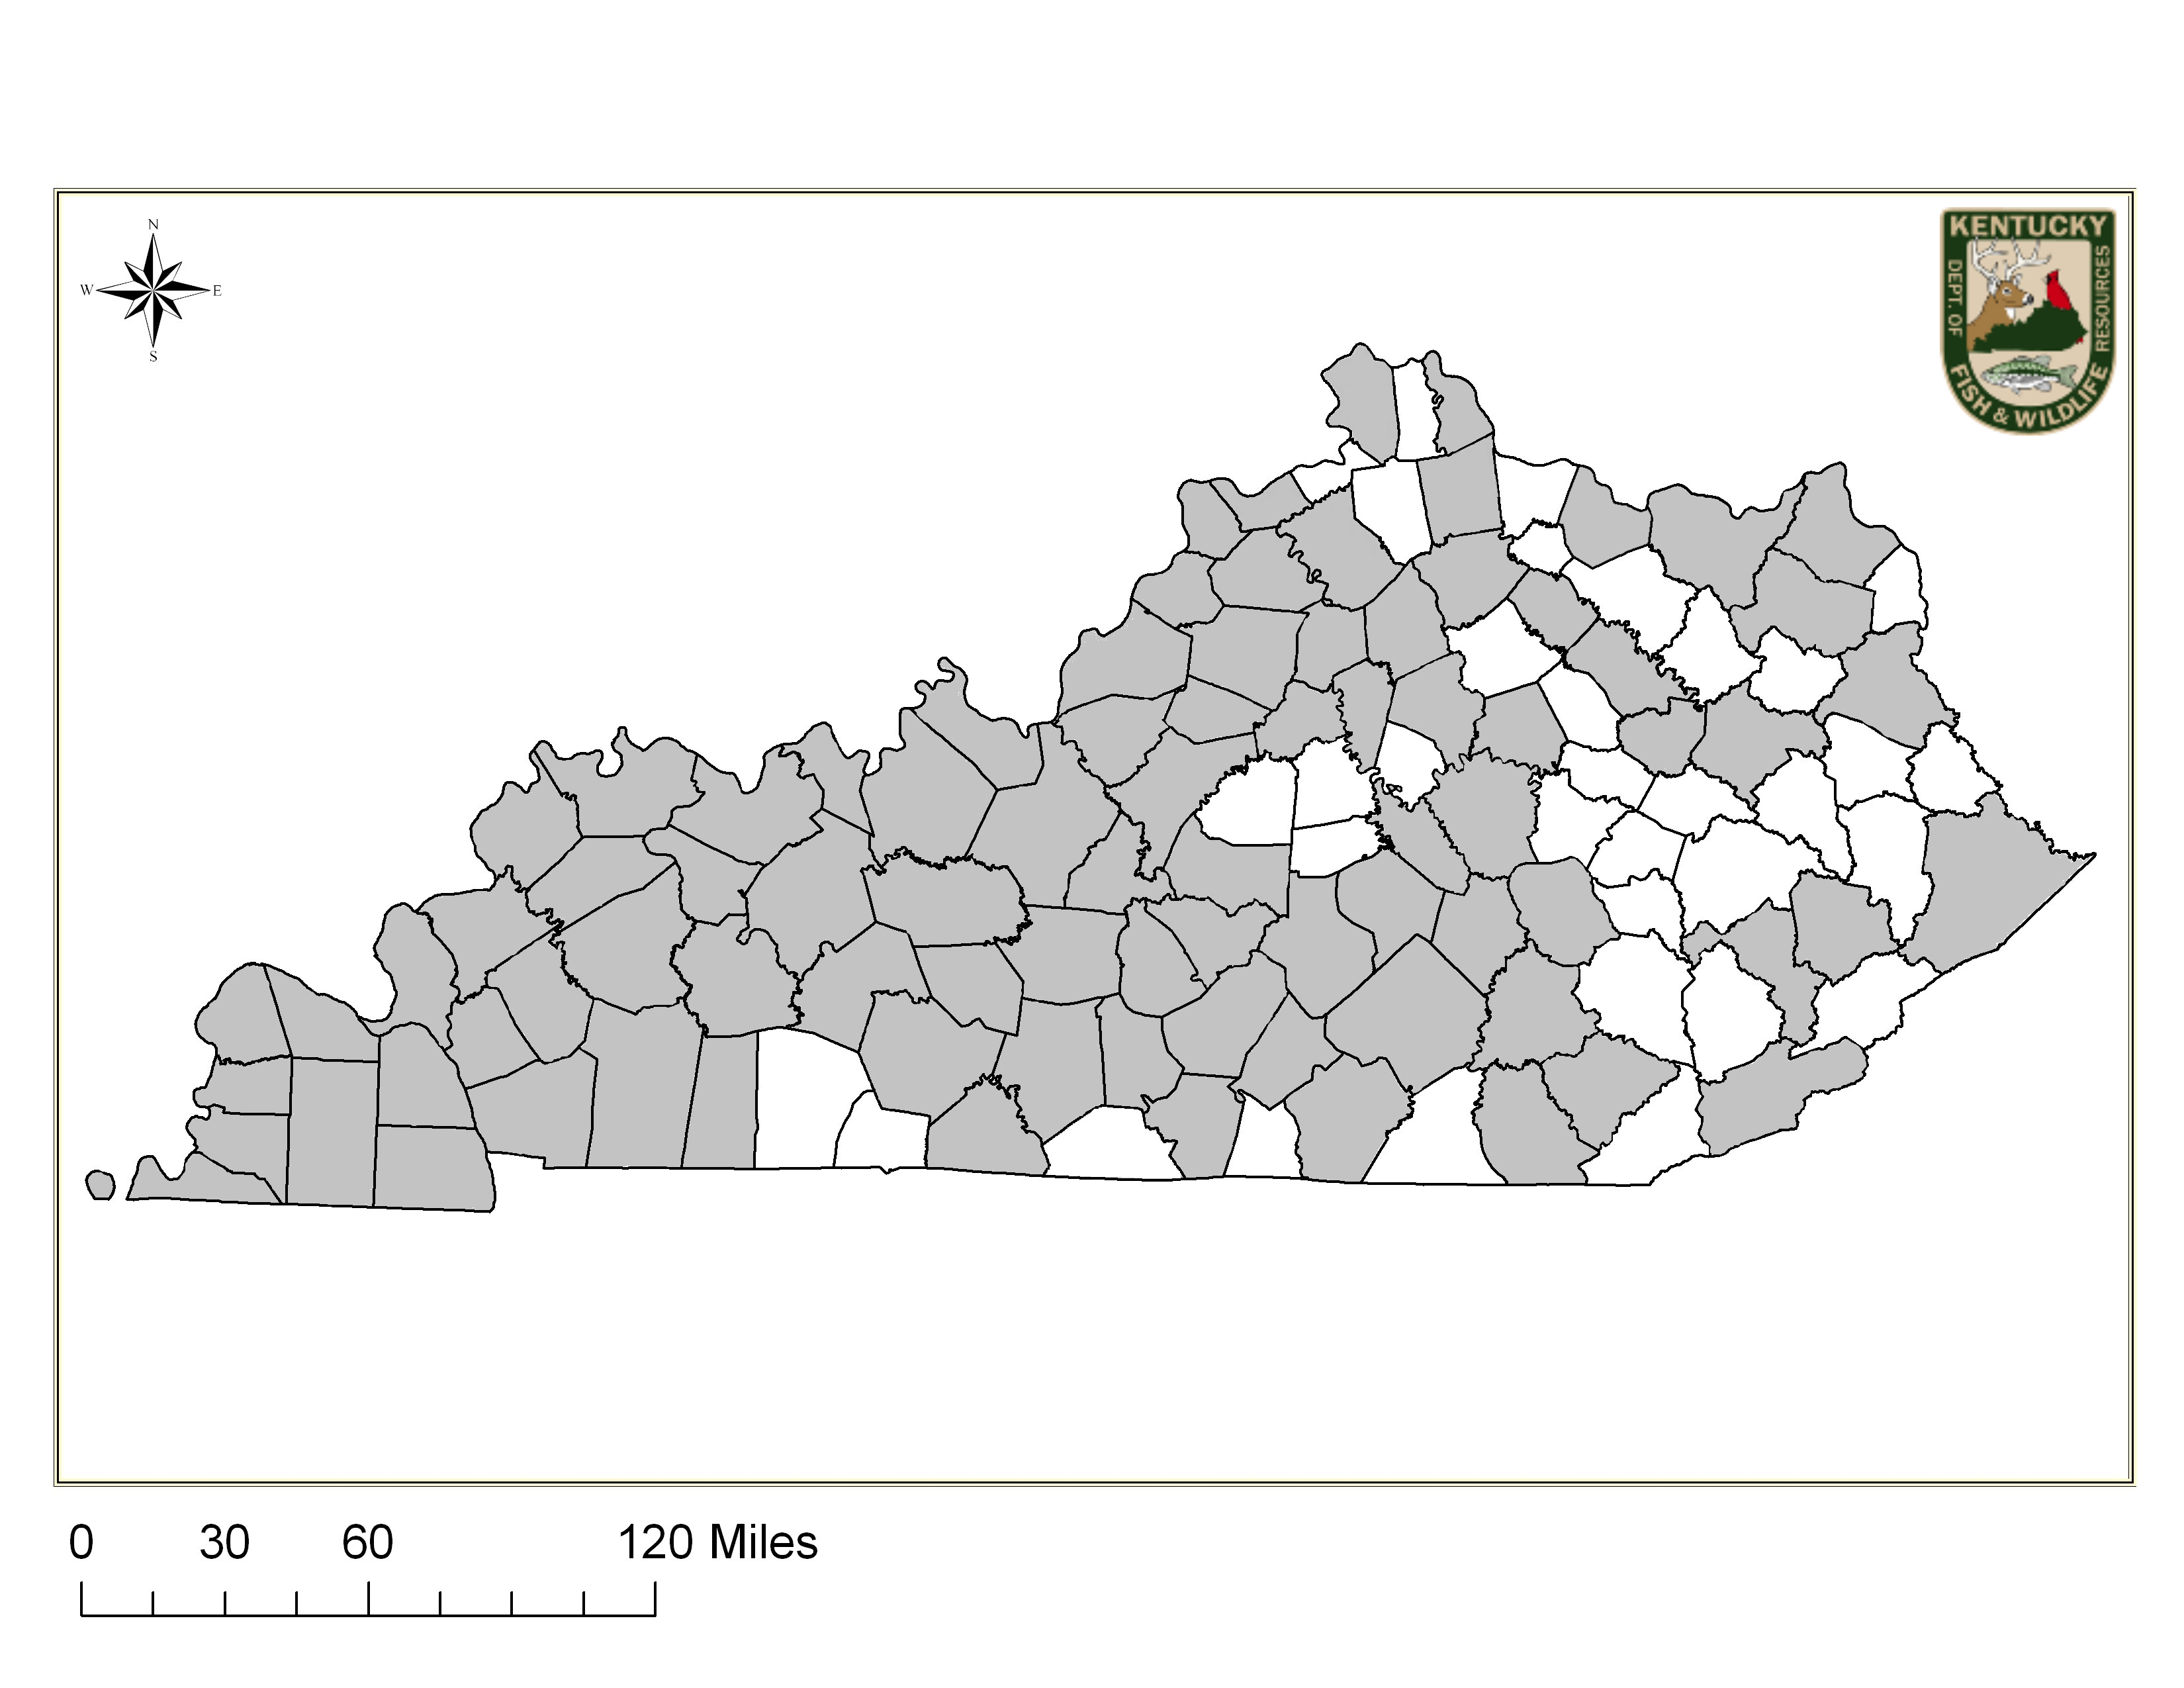 Eagle County Map